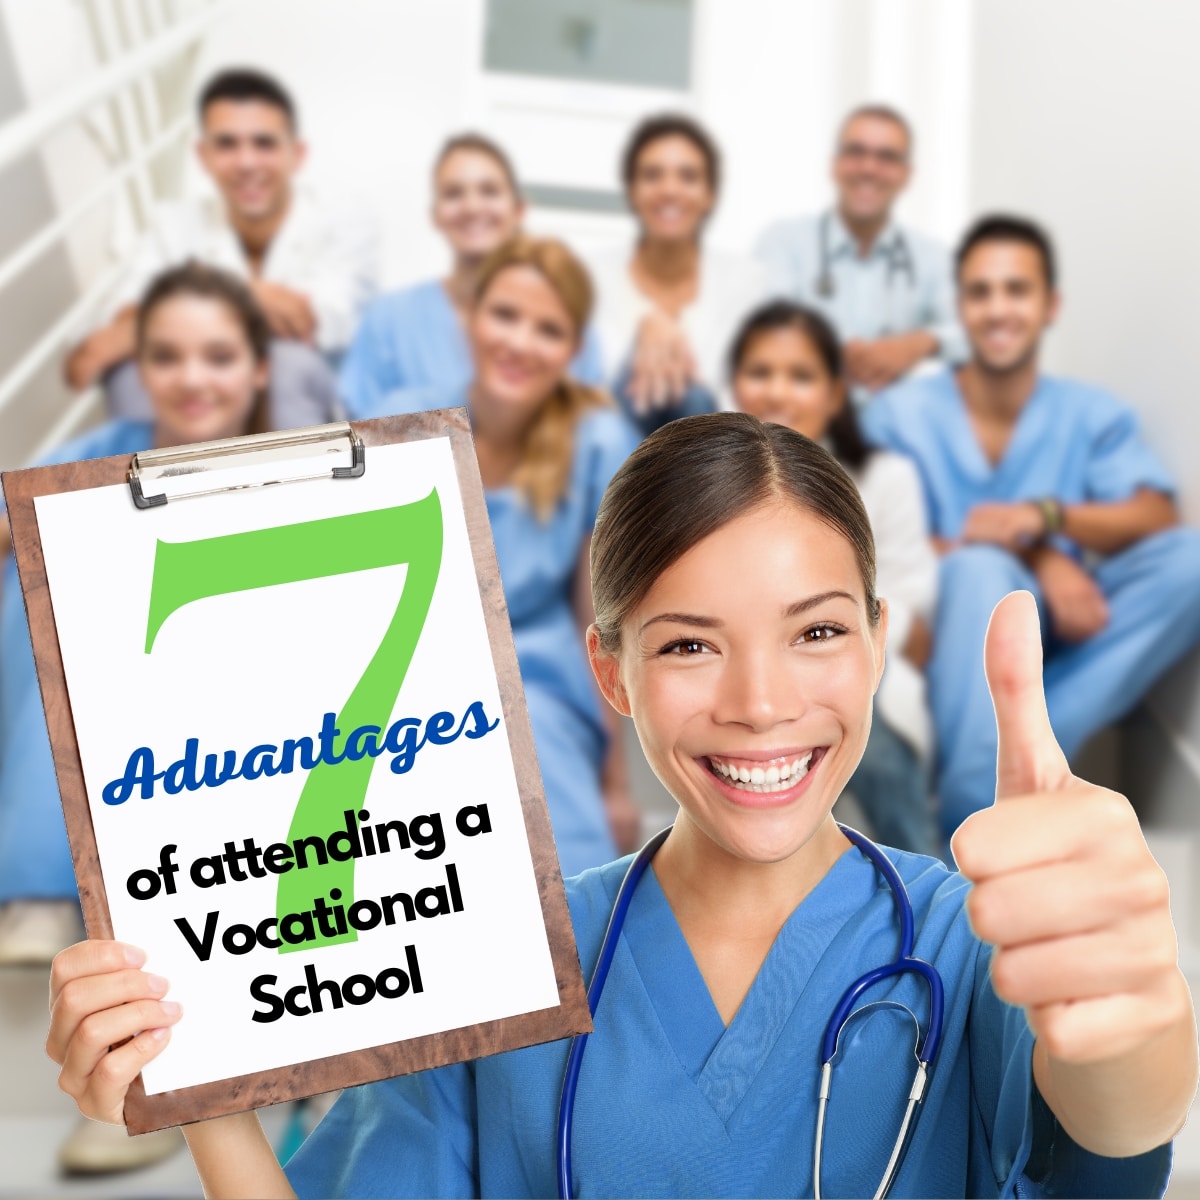 7 Advantages of attending a vocational school